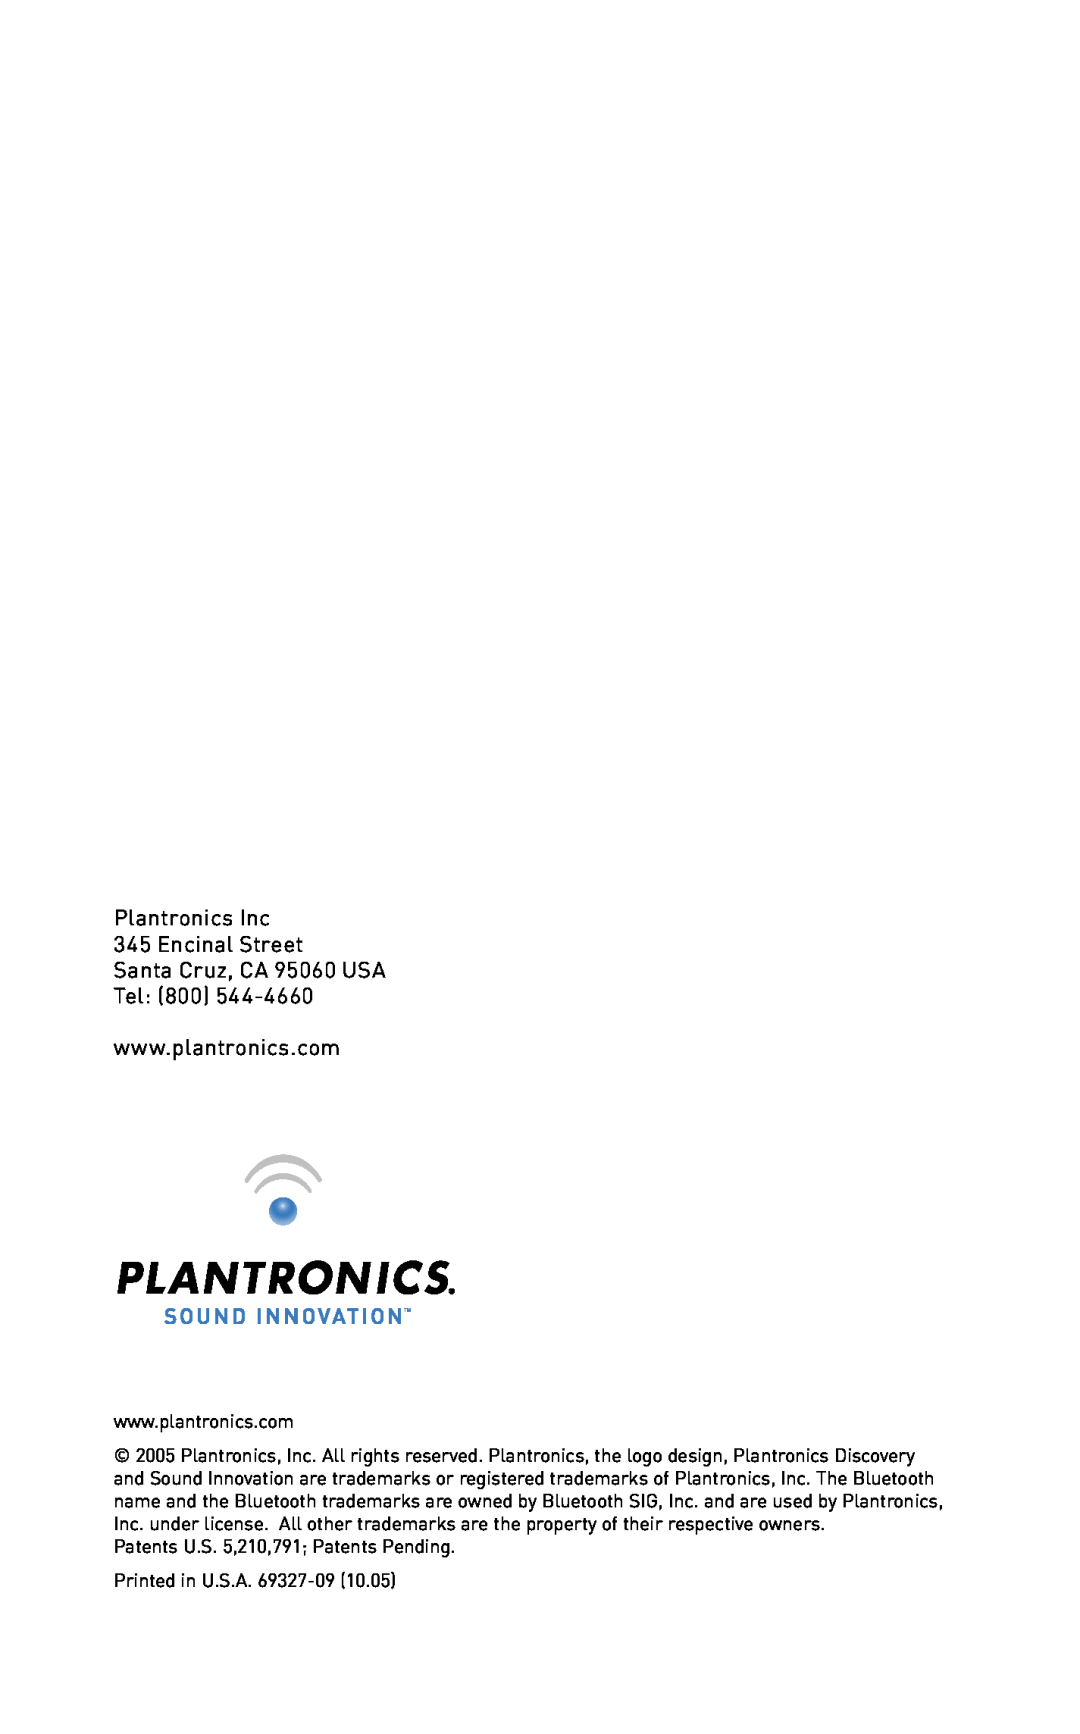 Plantronics DISCOVERY manual Plantronics Inc 345 Encinal Street, Santa Cruz, CA 95060 USA Tel 